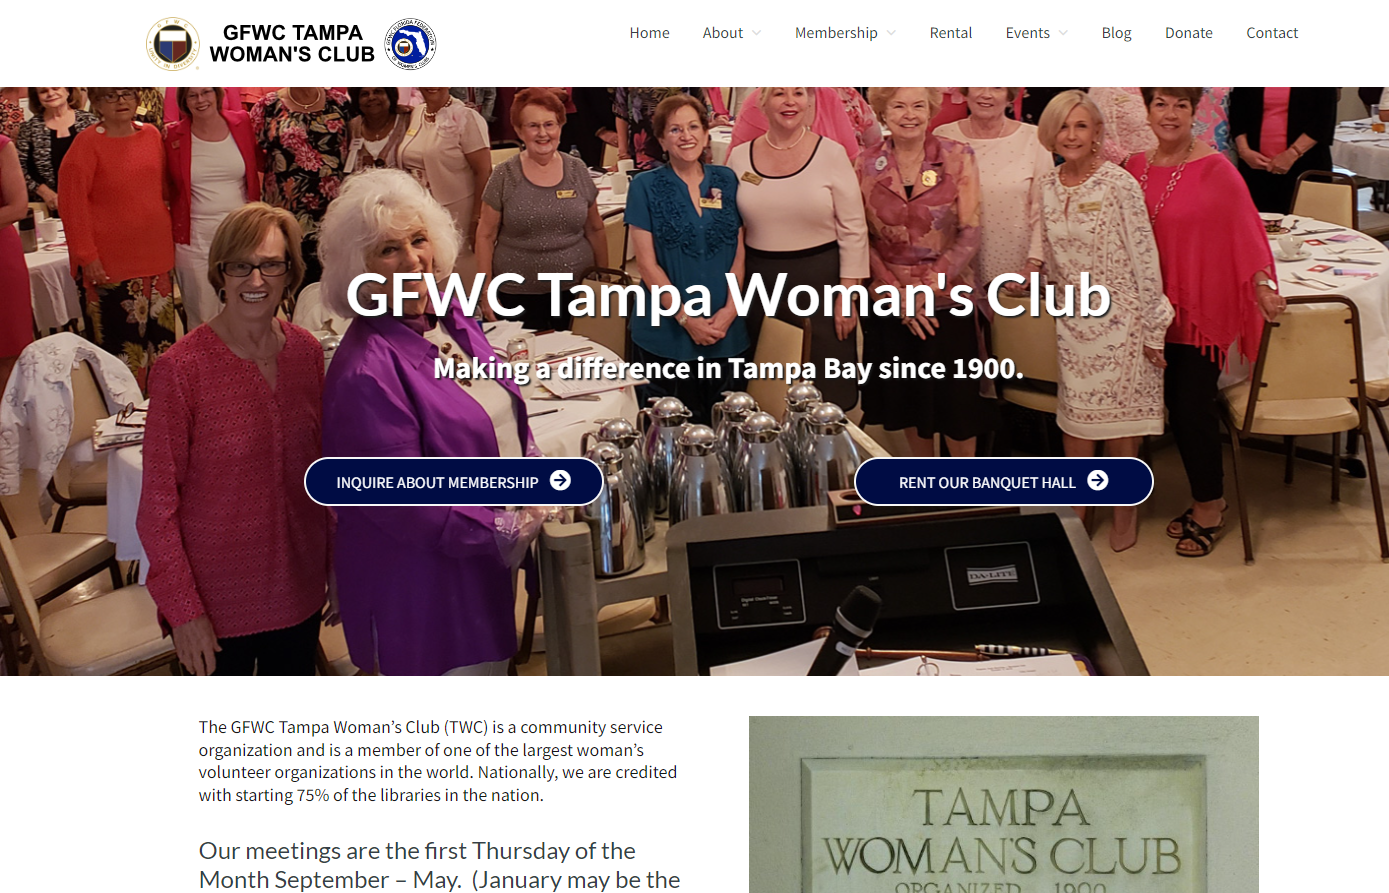 GFCW Tampa Woman's Club